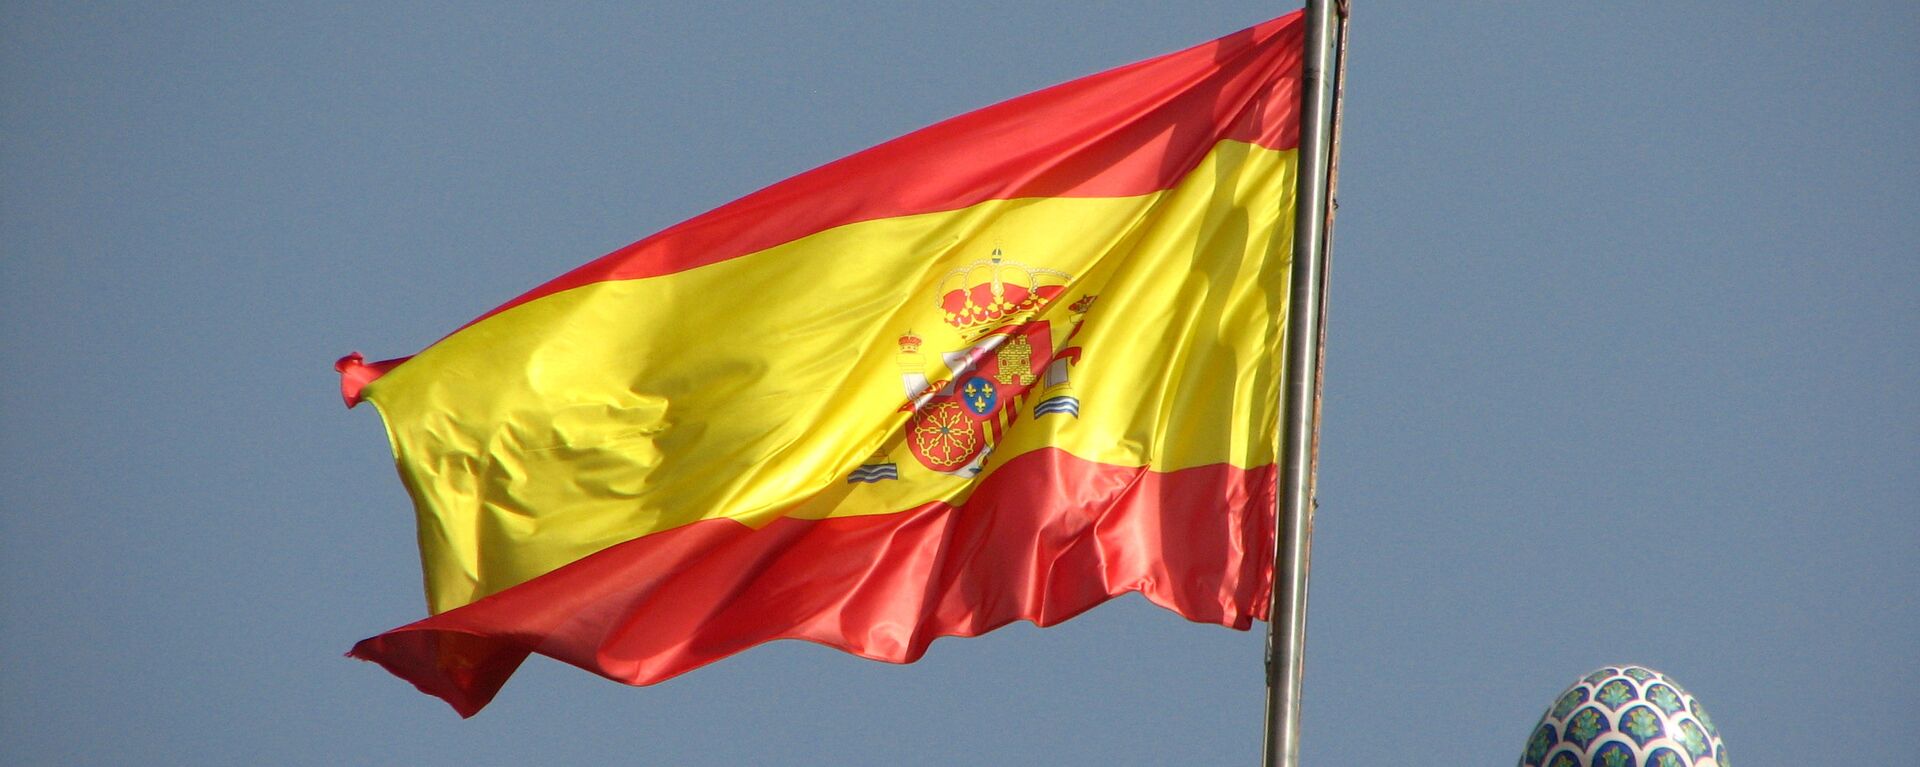 Bandera de España - Sputnik Mundo, 1920, 10.03.2021